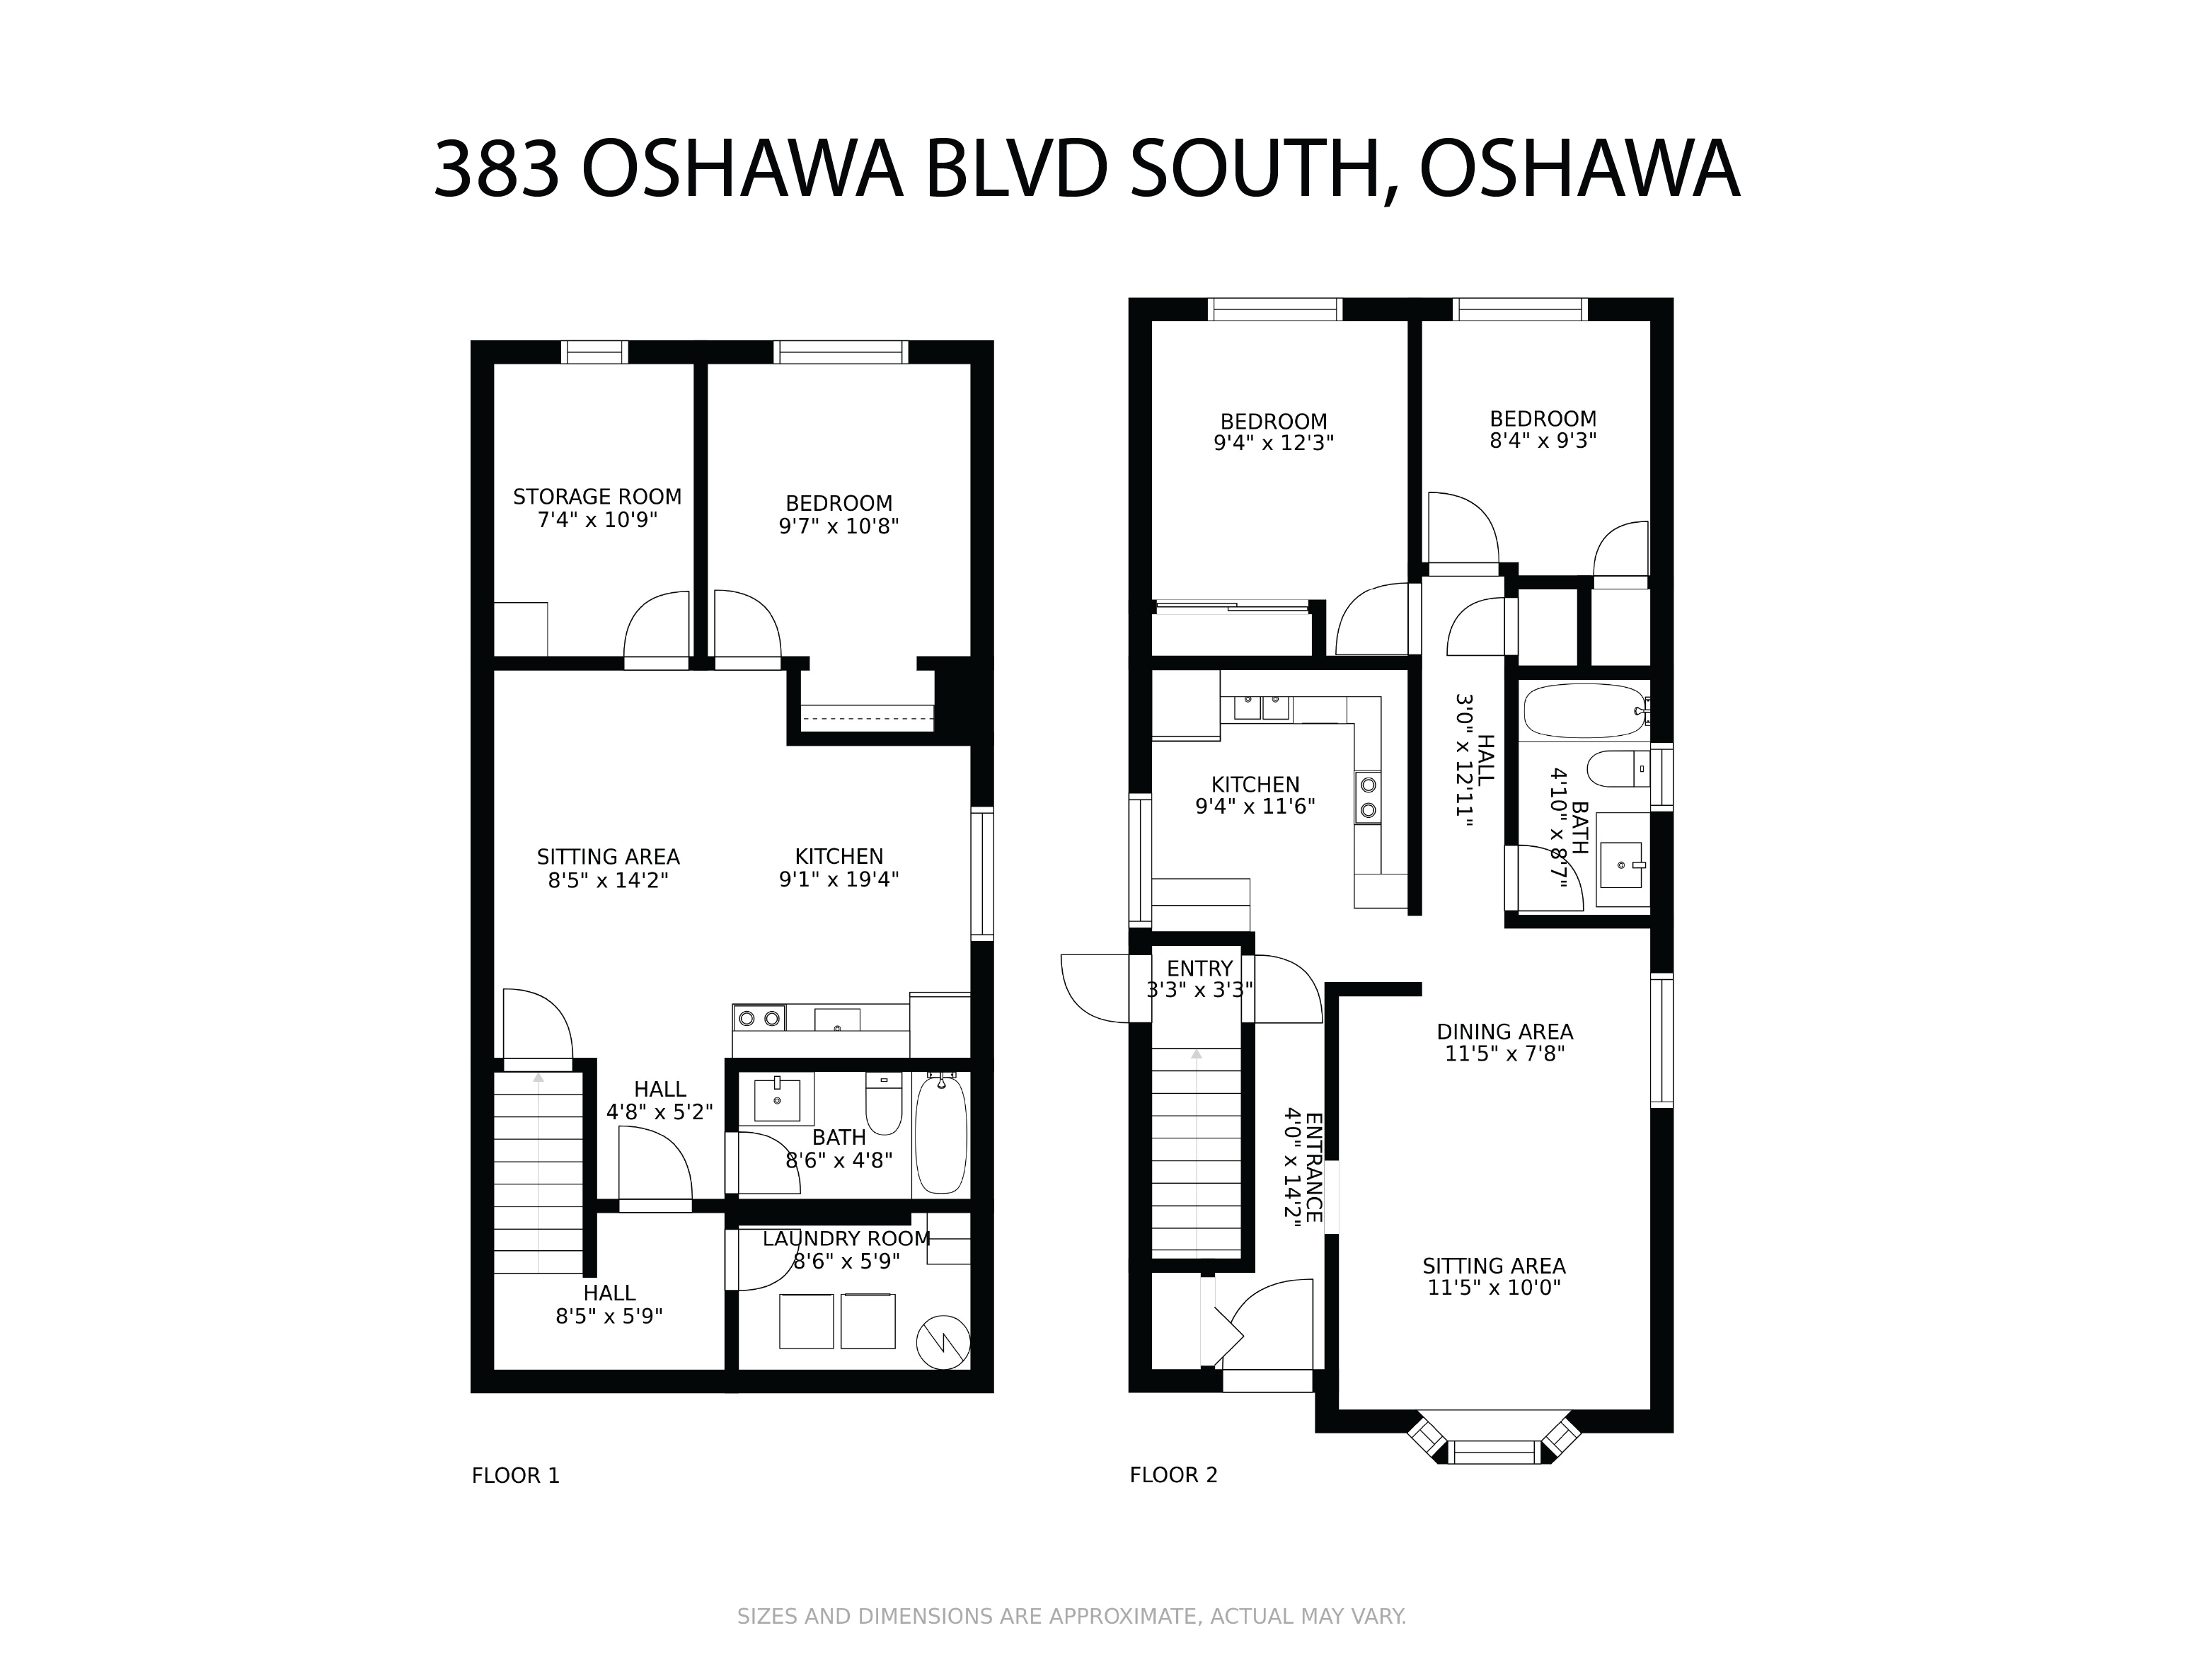 383 Oshawa Blvd South floorplan